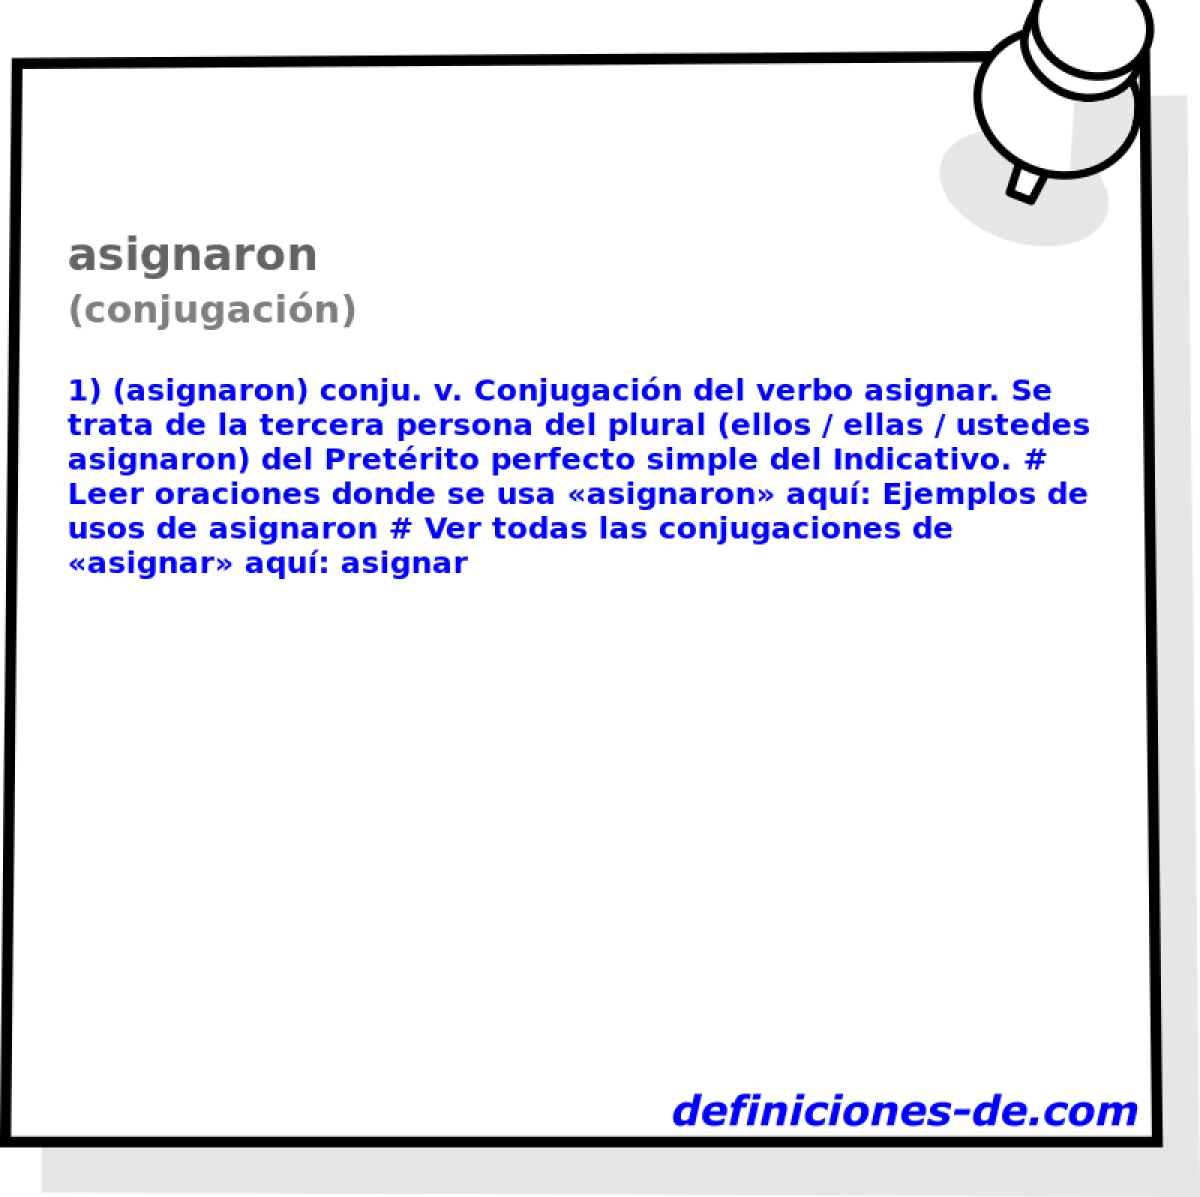 asignaron (conjugacin)